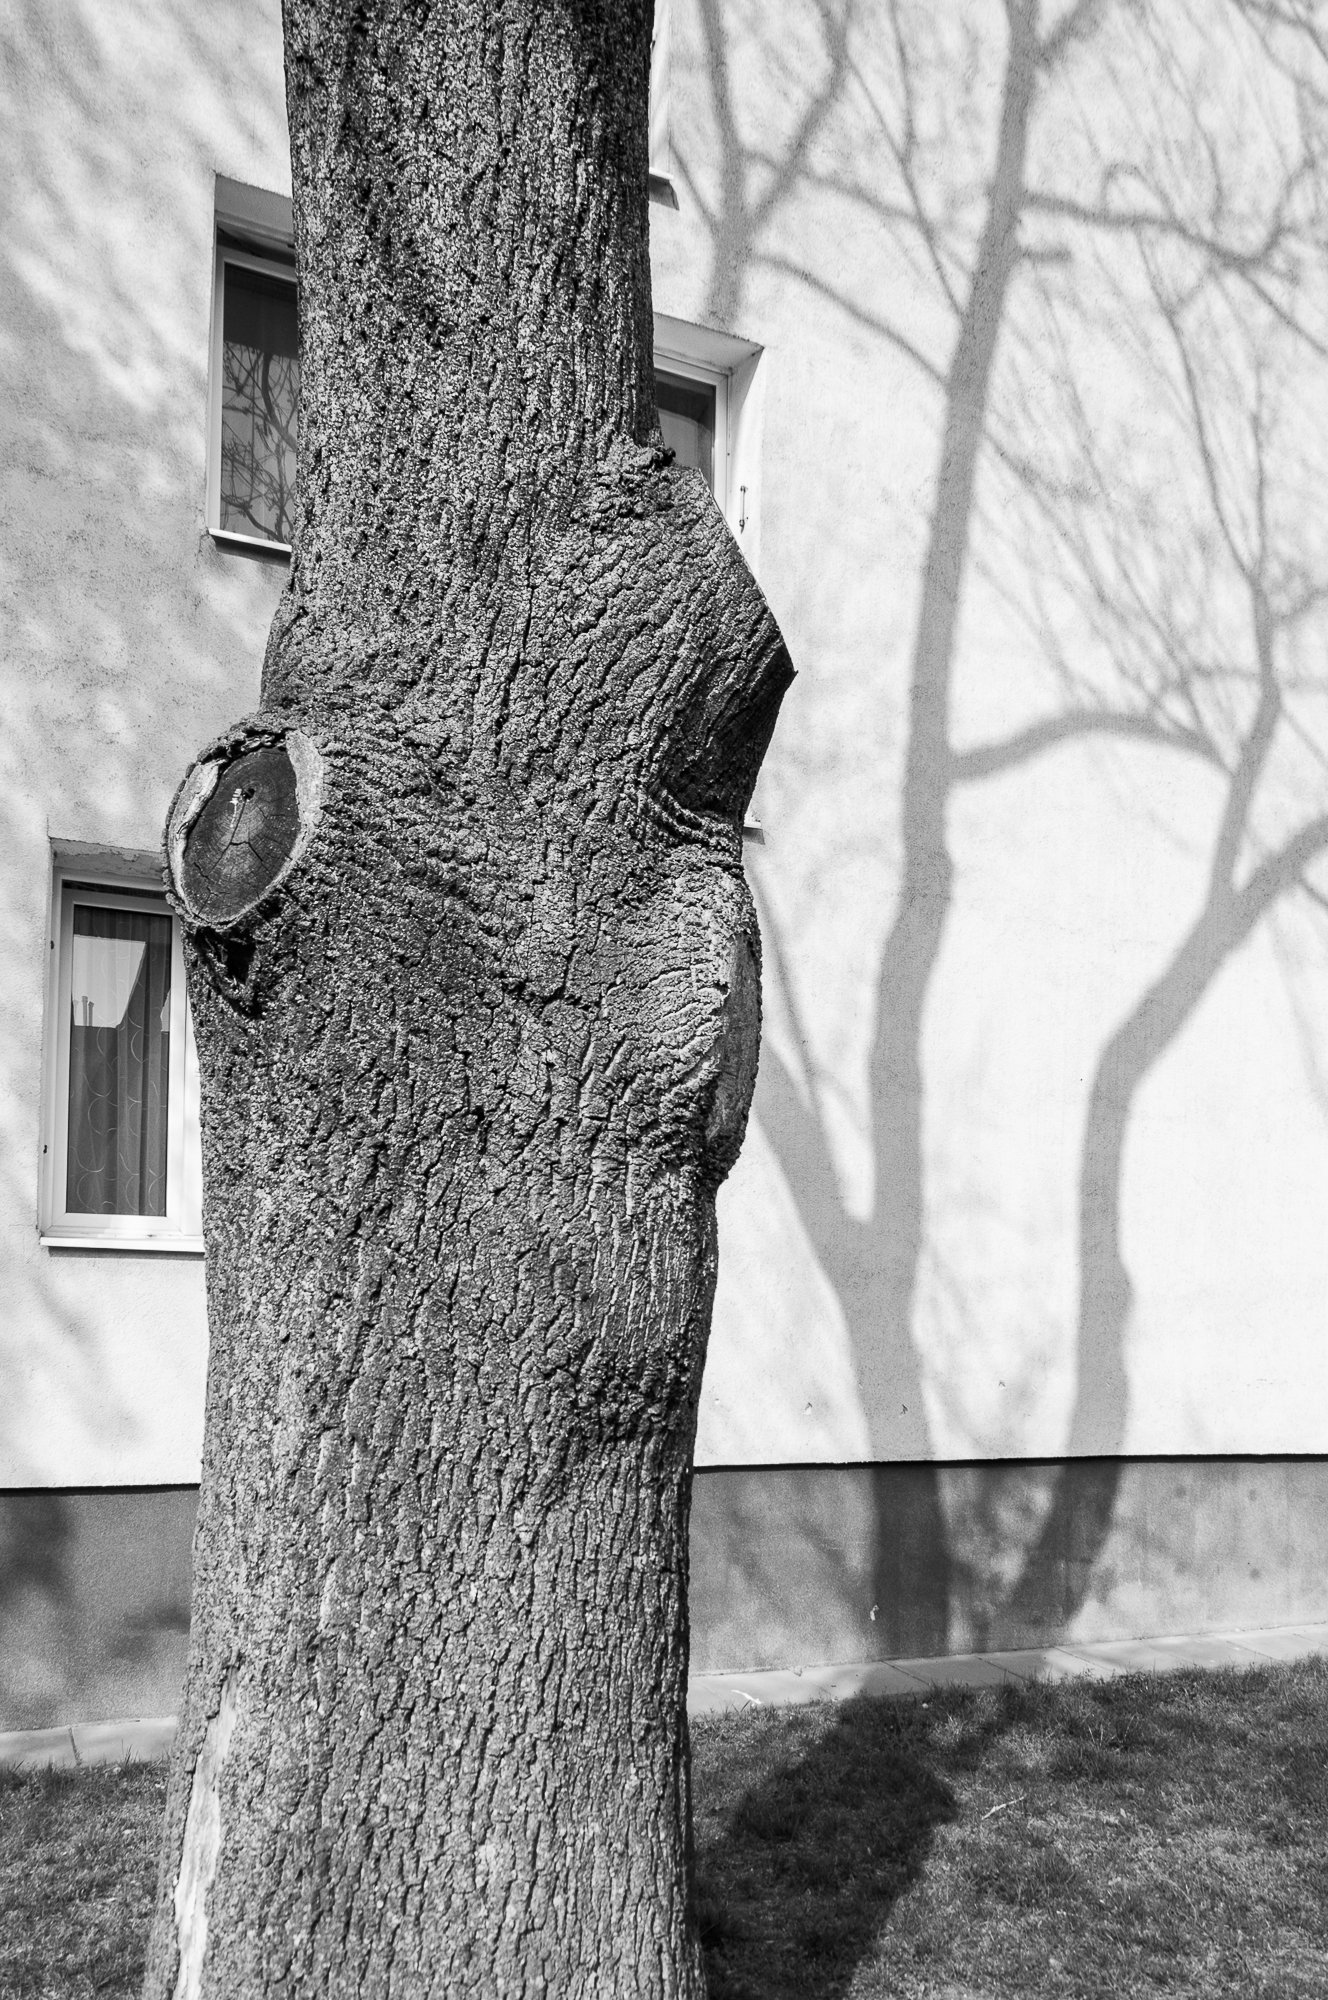 Adam Mazek Photography Warsaw (Warszawa) 2019. Post: "Stress." Minimalism. Tree and its shadow.